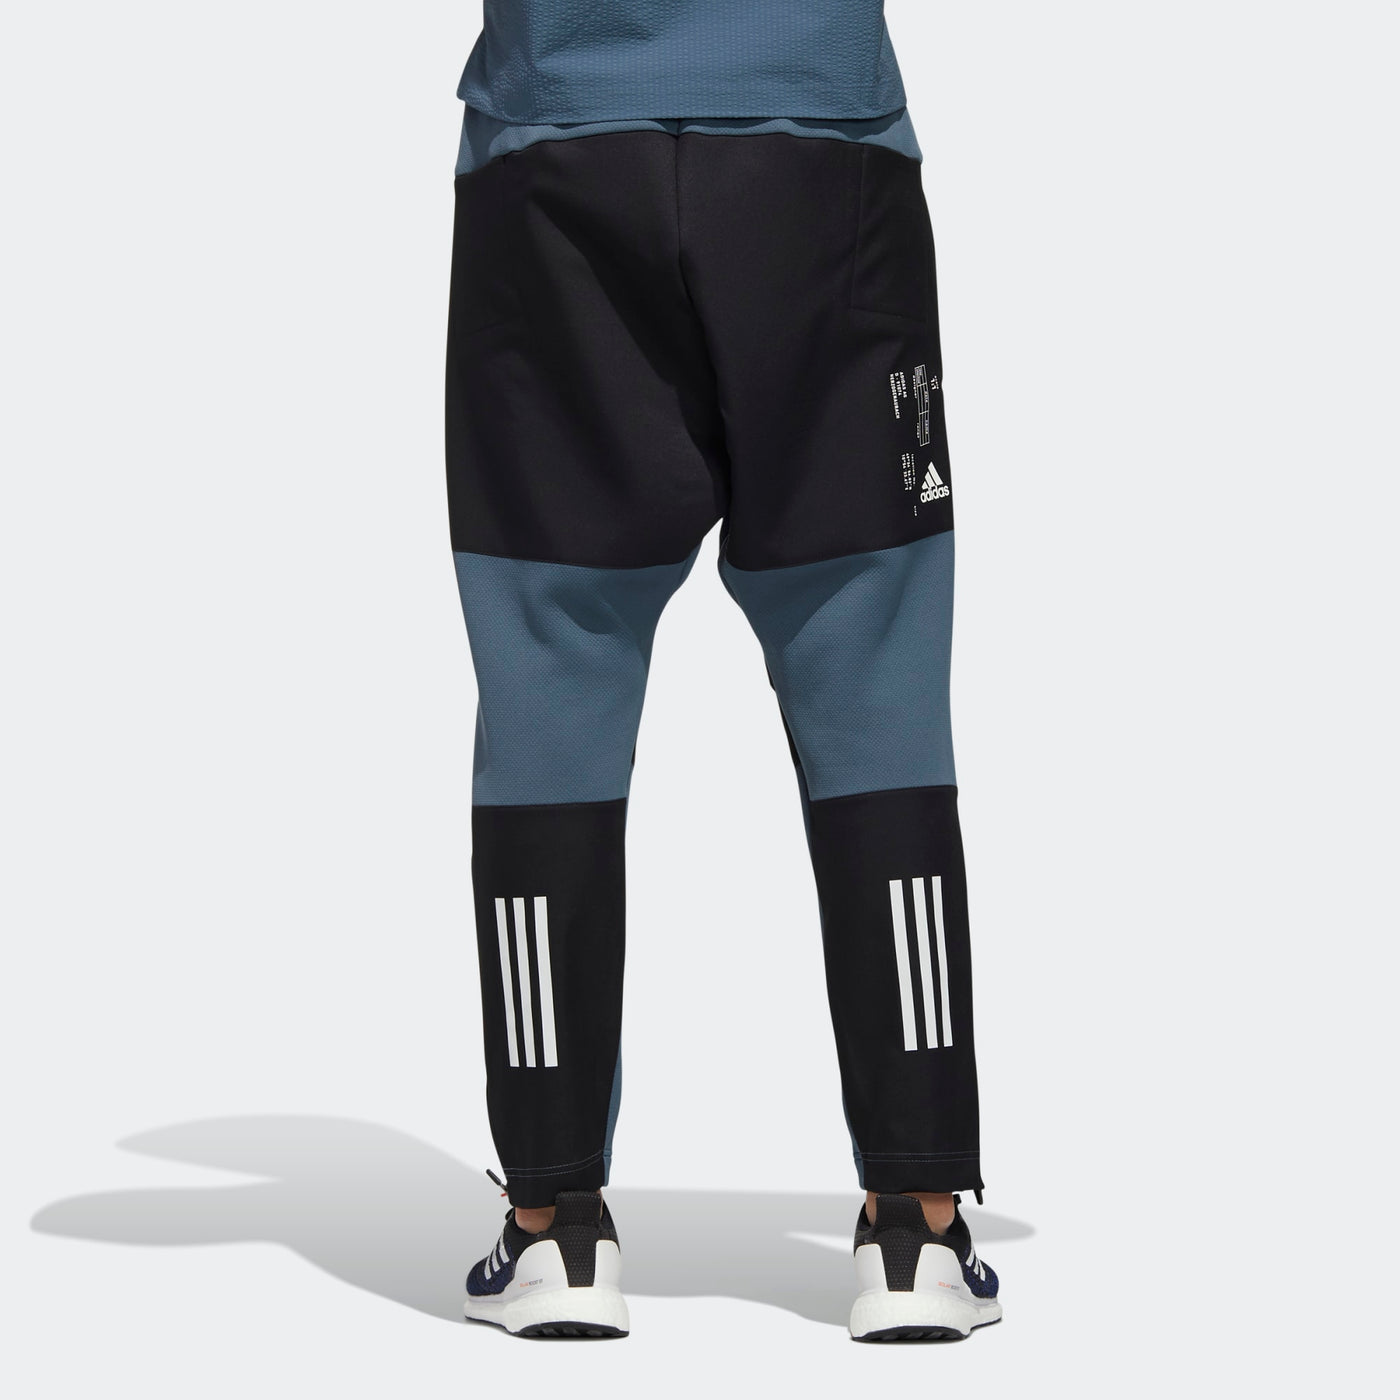 Adidas Tech Doubleknit Men's Pants